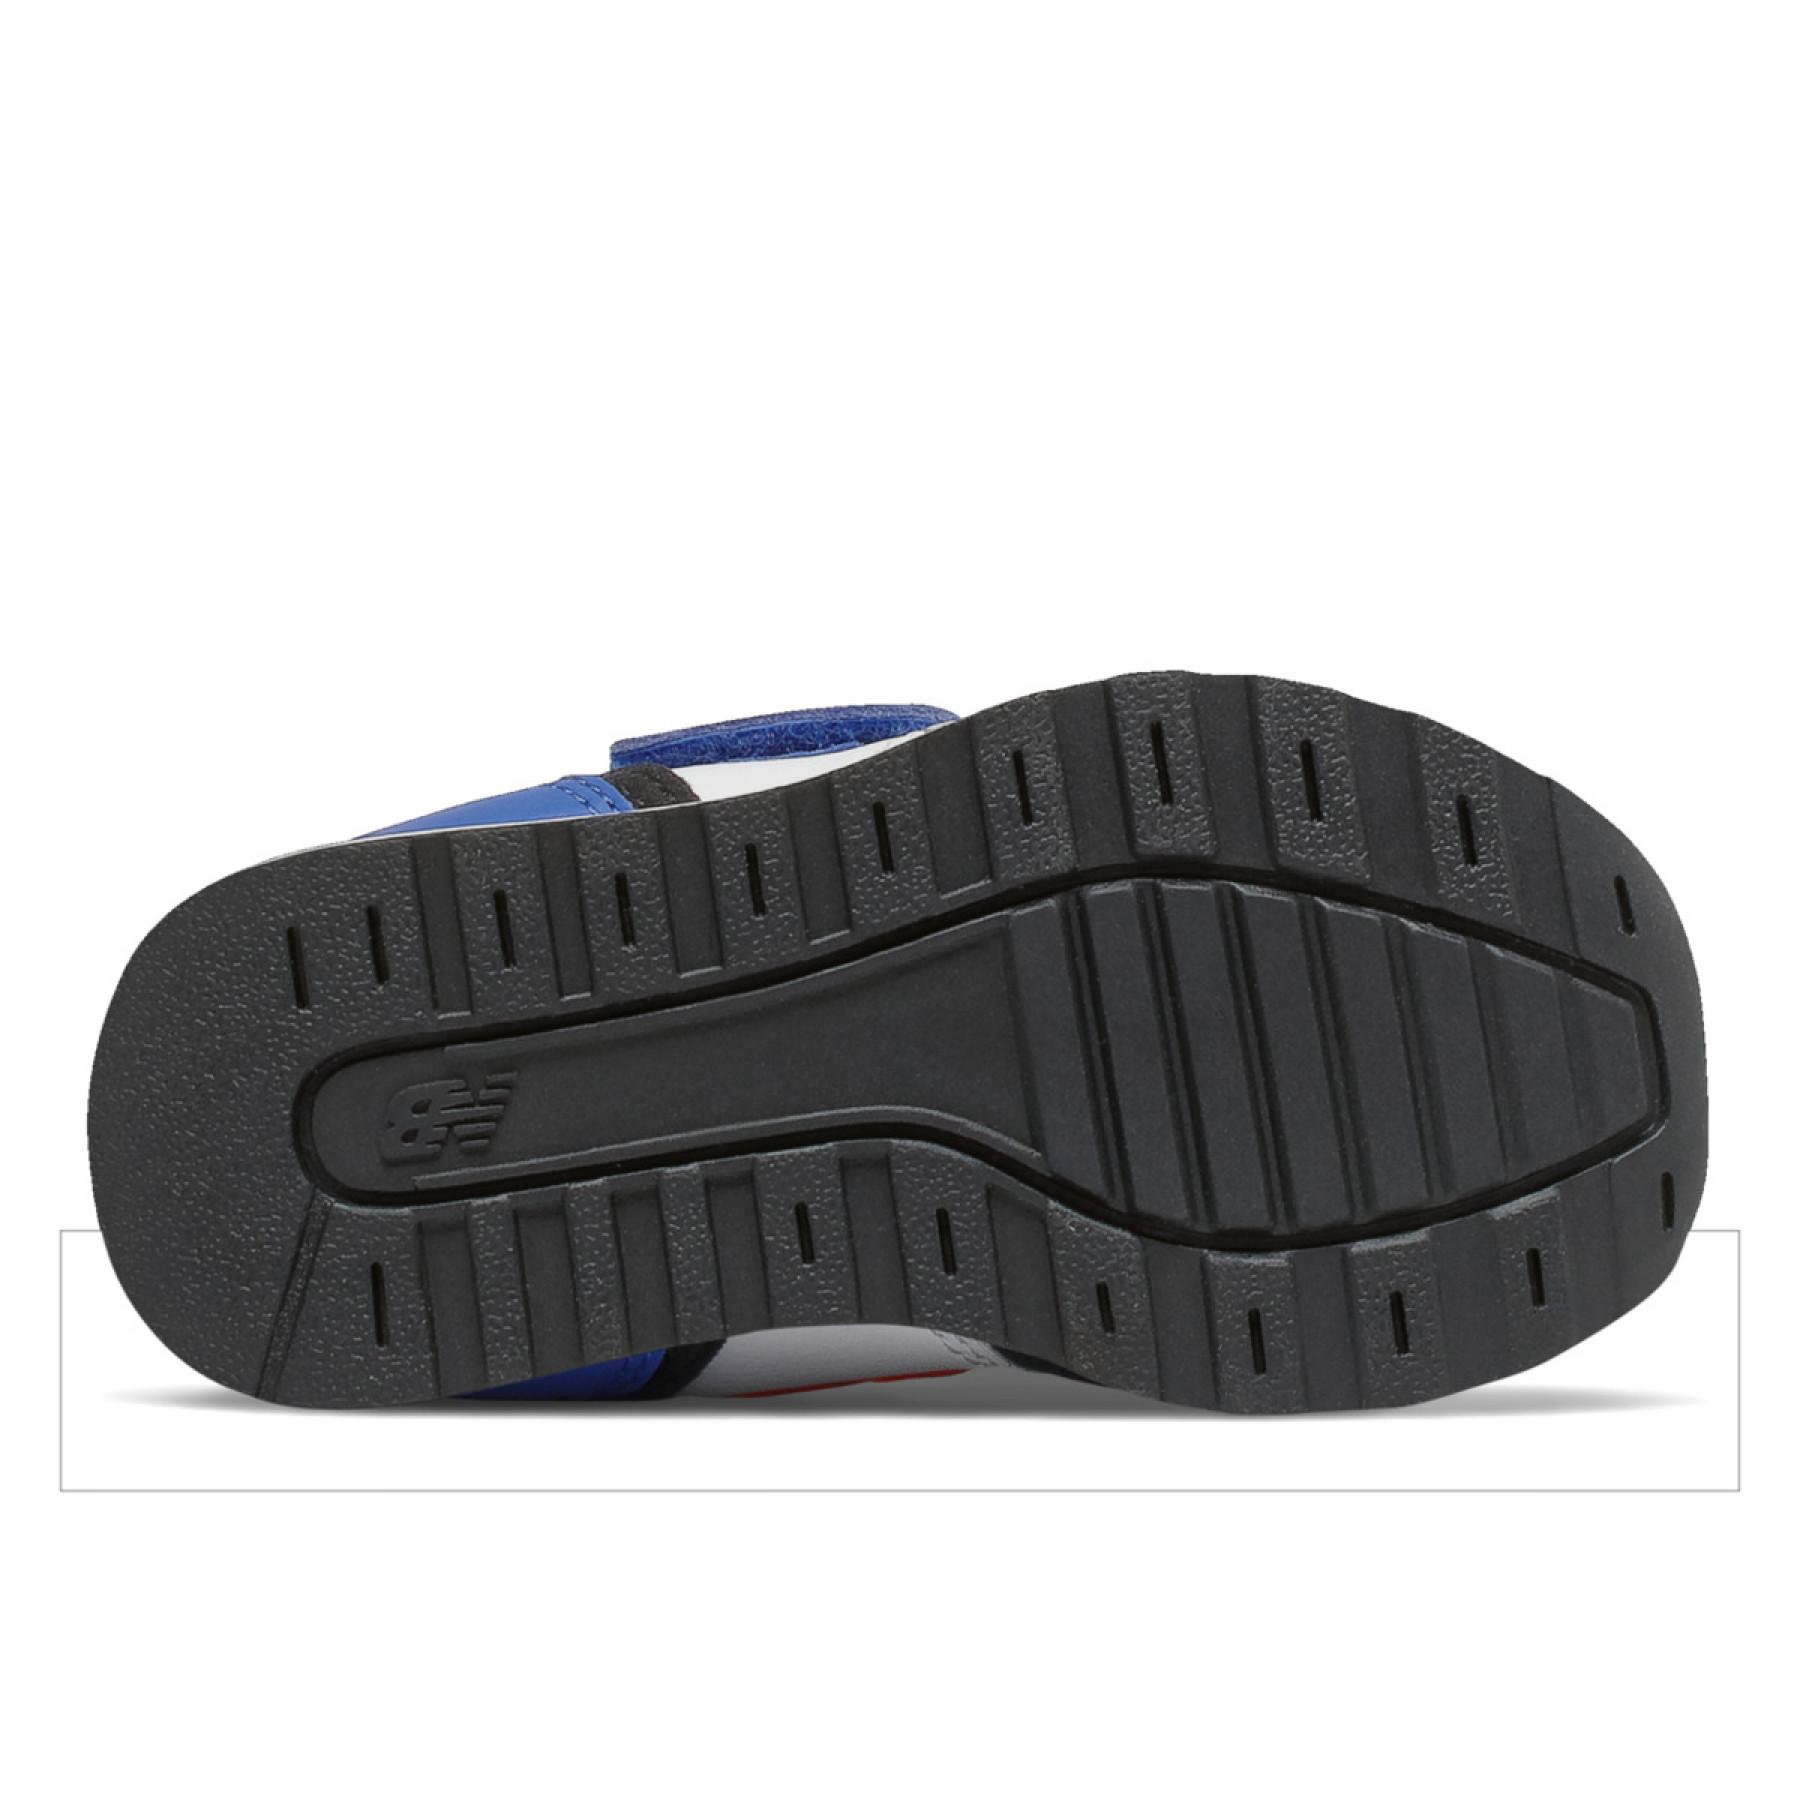 Zapatillas para niños New Balance 996